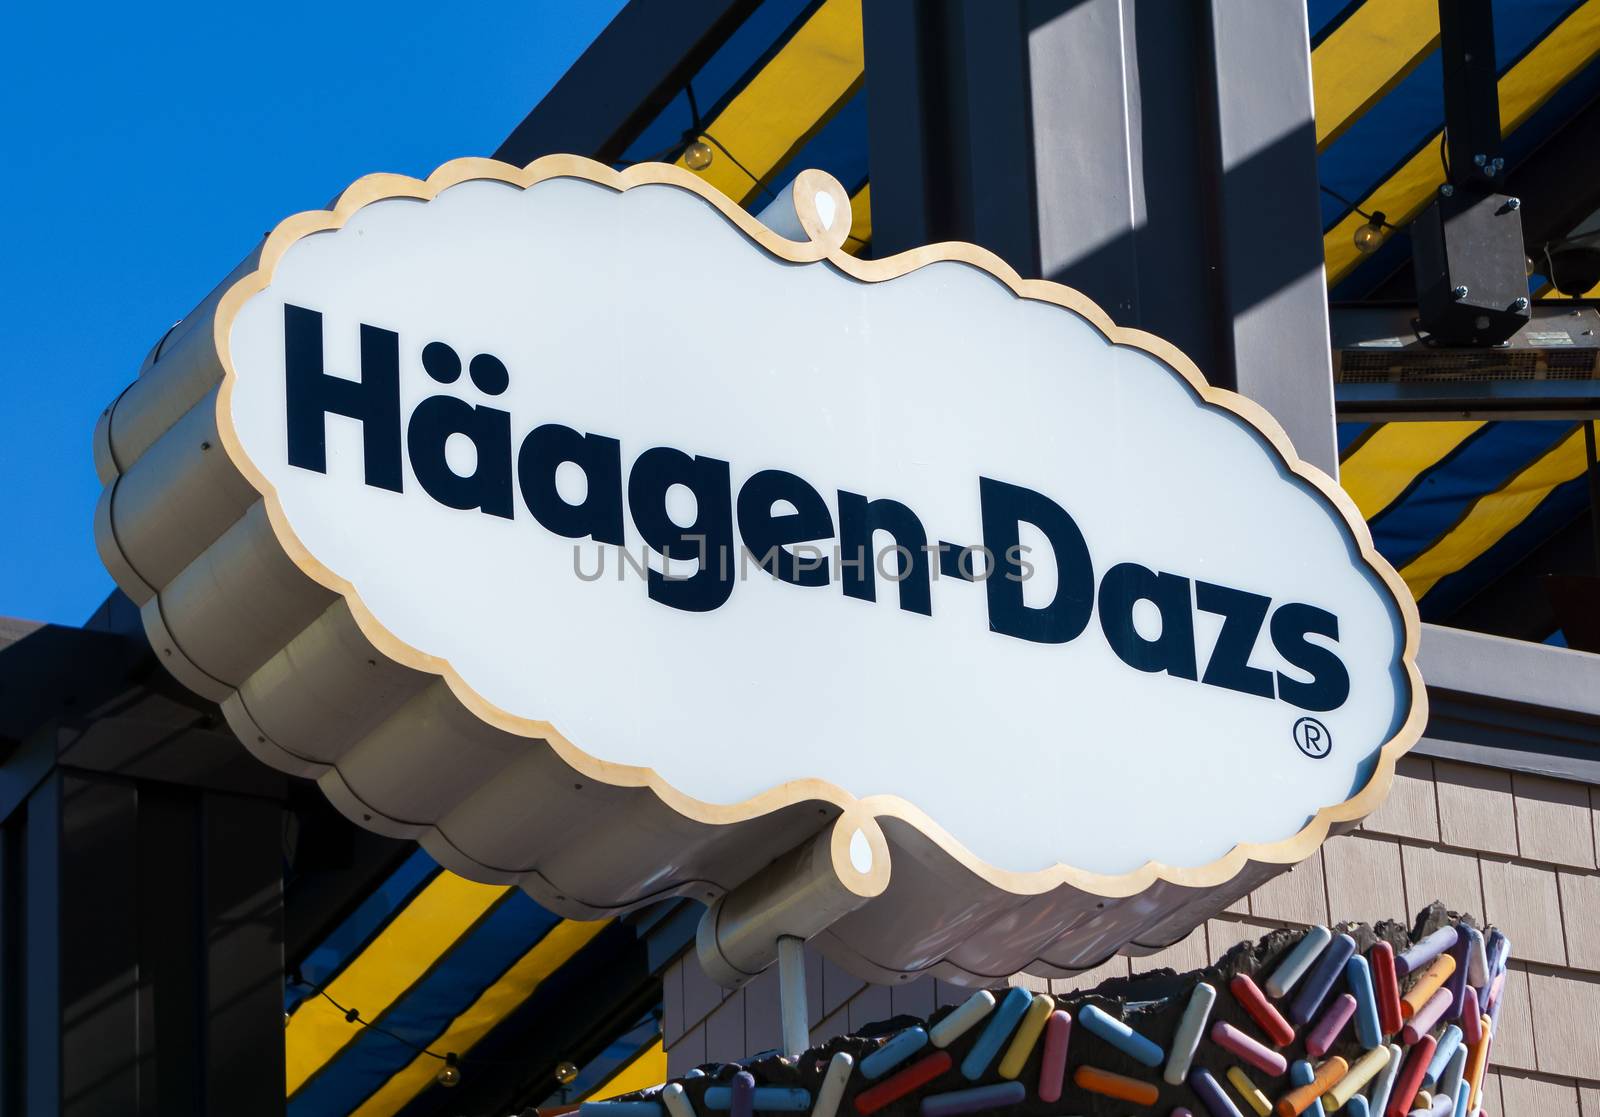 ANAHEIM, CA/USA - OCTOBER 10, 2015: Haagen-Dazs ice cream store exterior. Haagen-Dazs is an ice cream brand with franchises throughout the world.